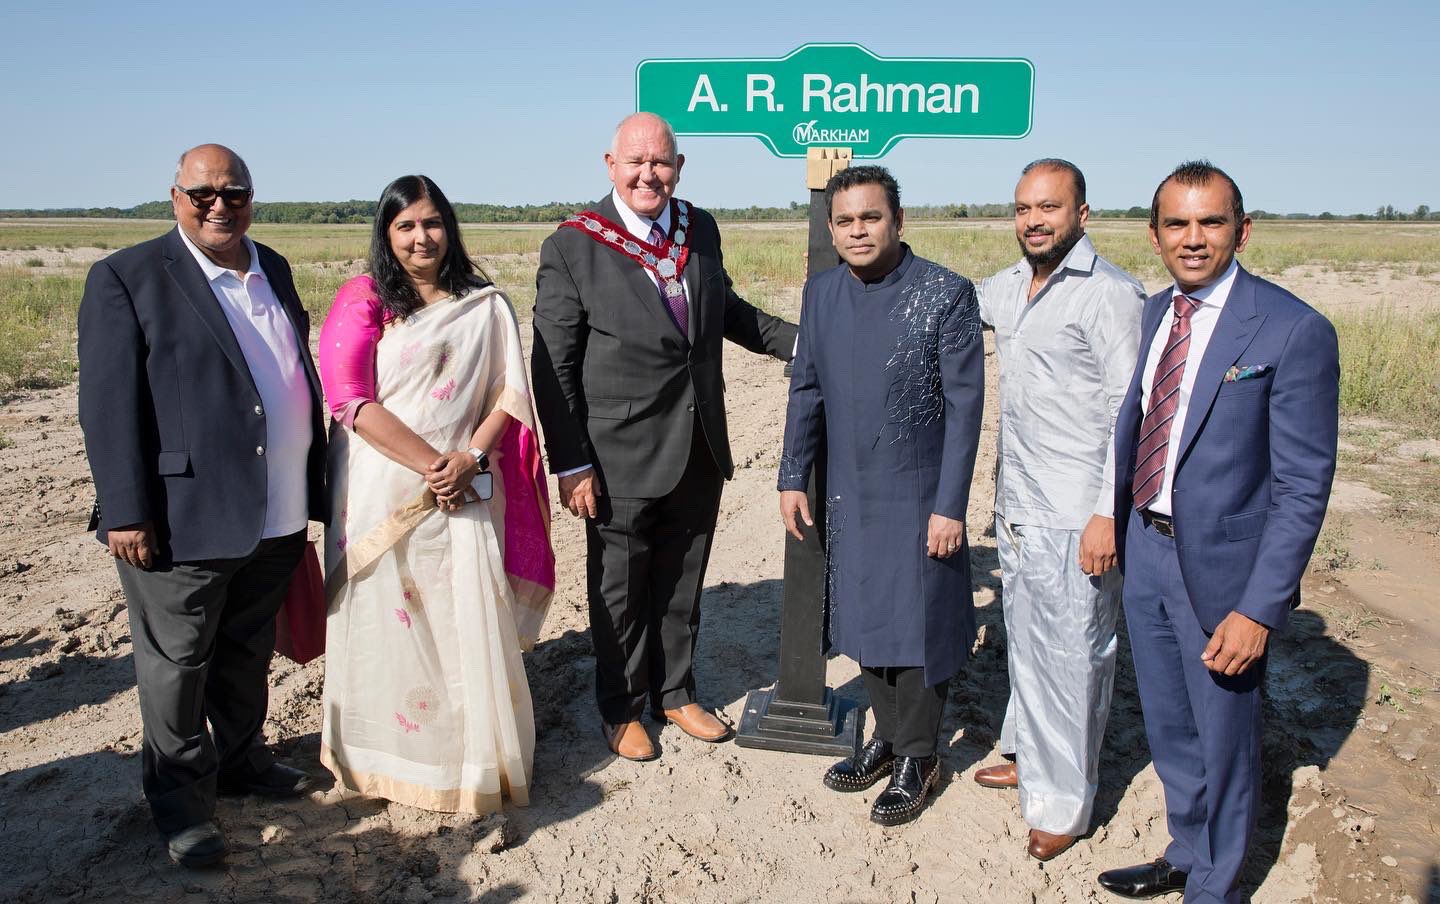 Street named after AR Rahman in Canada